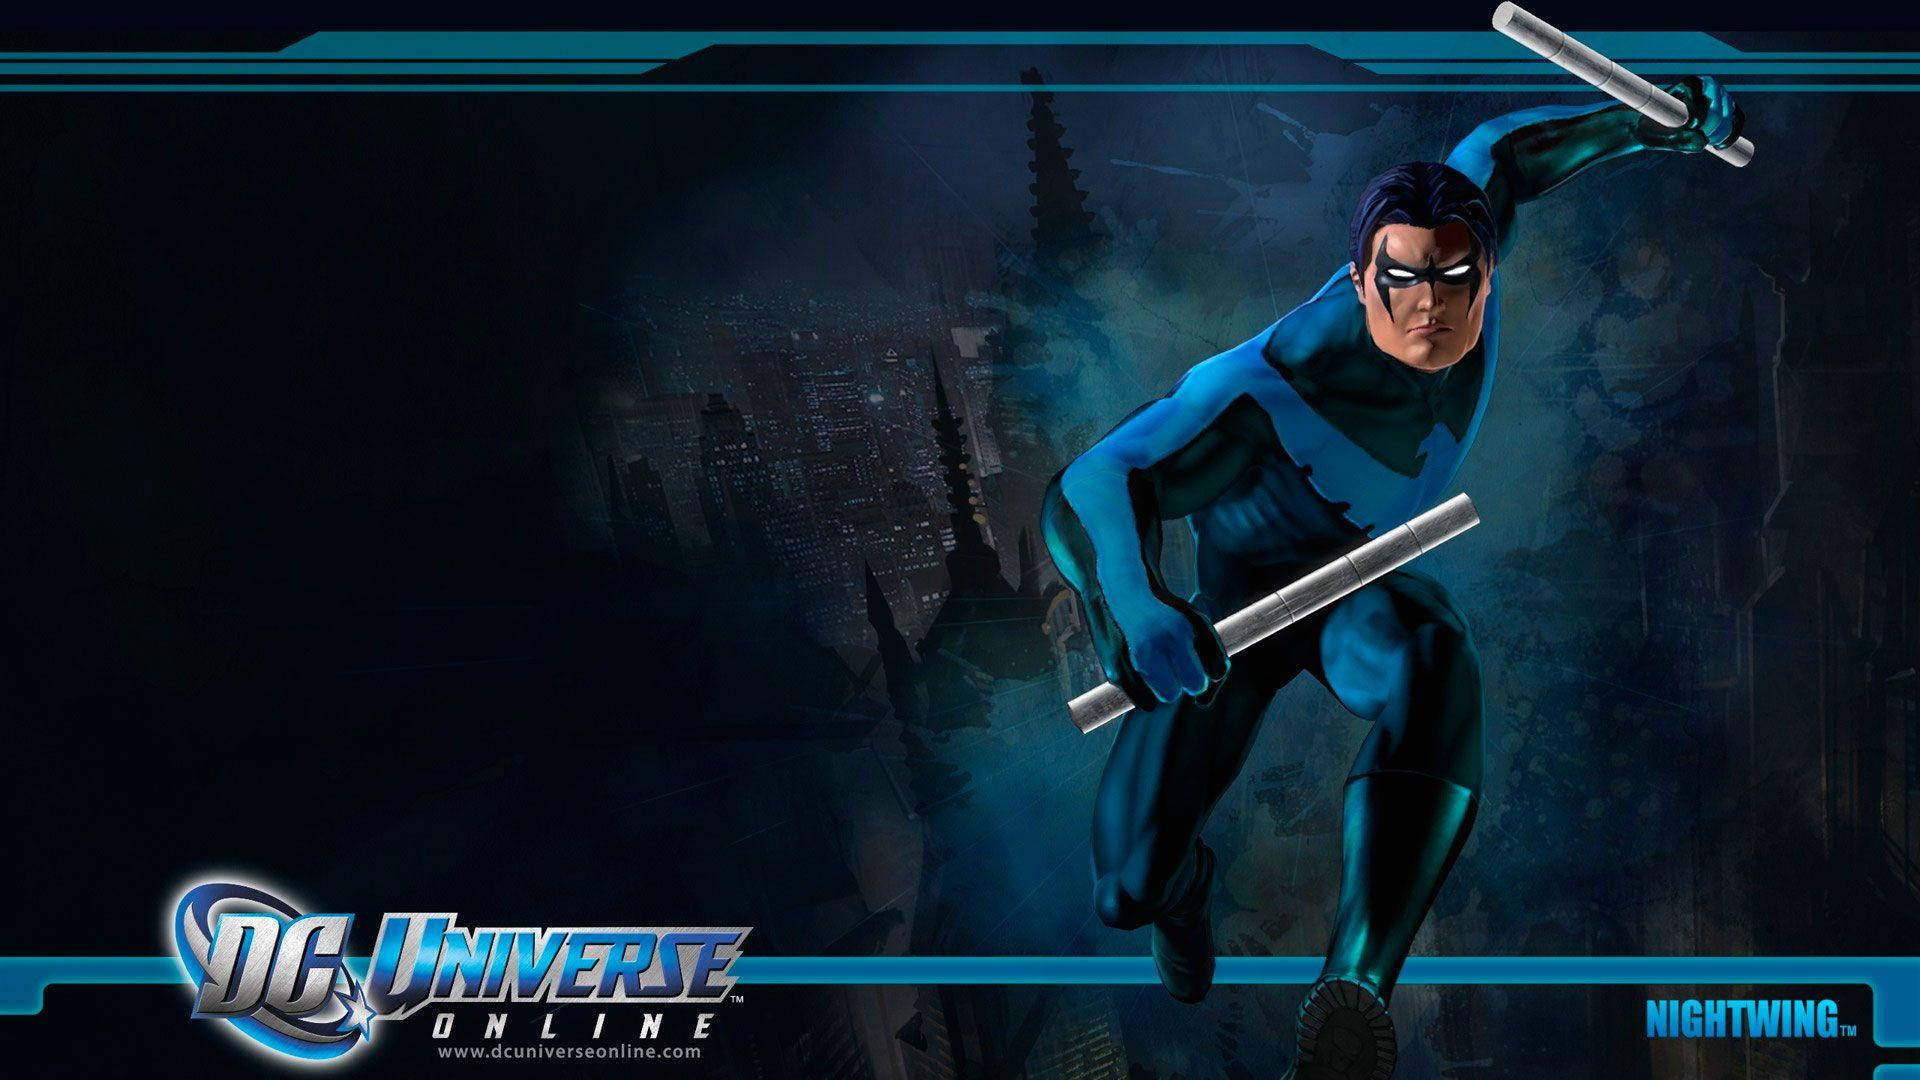 Video Game DC Universe Online Nightwing Loading Screen Wallpaper